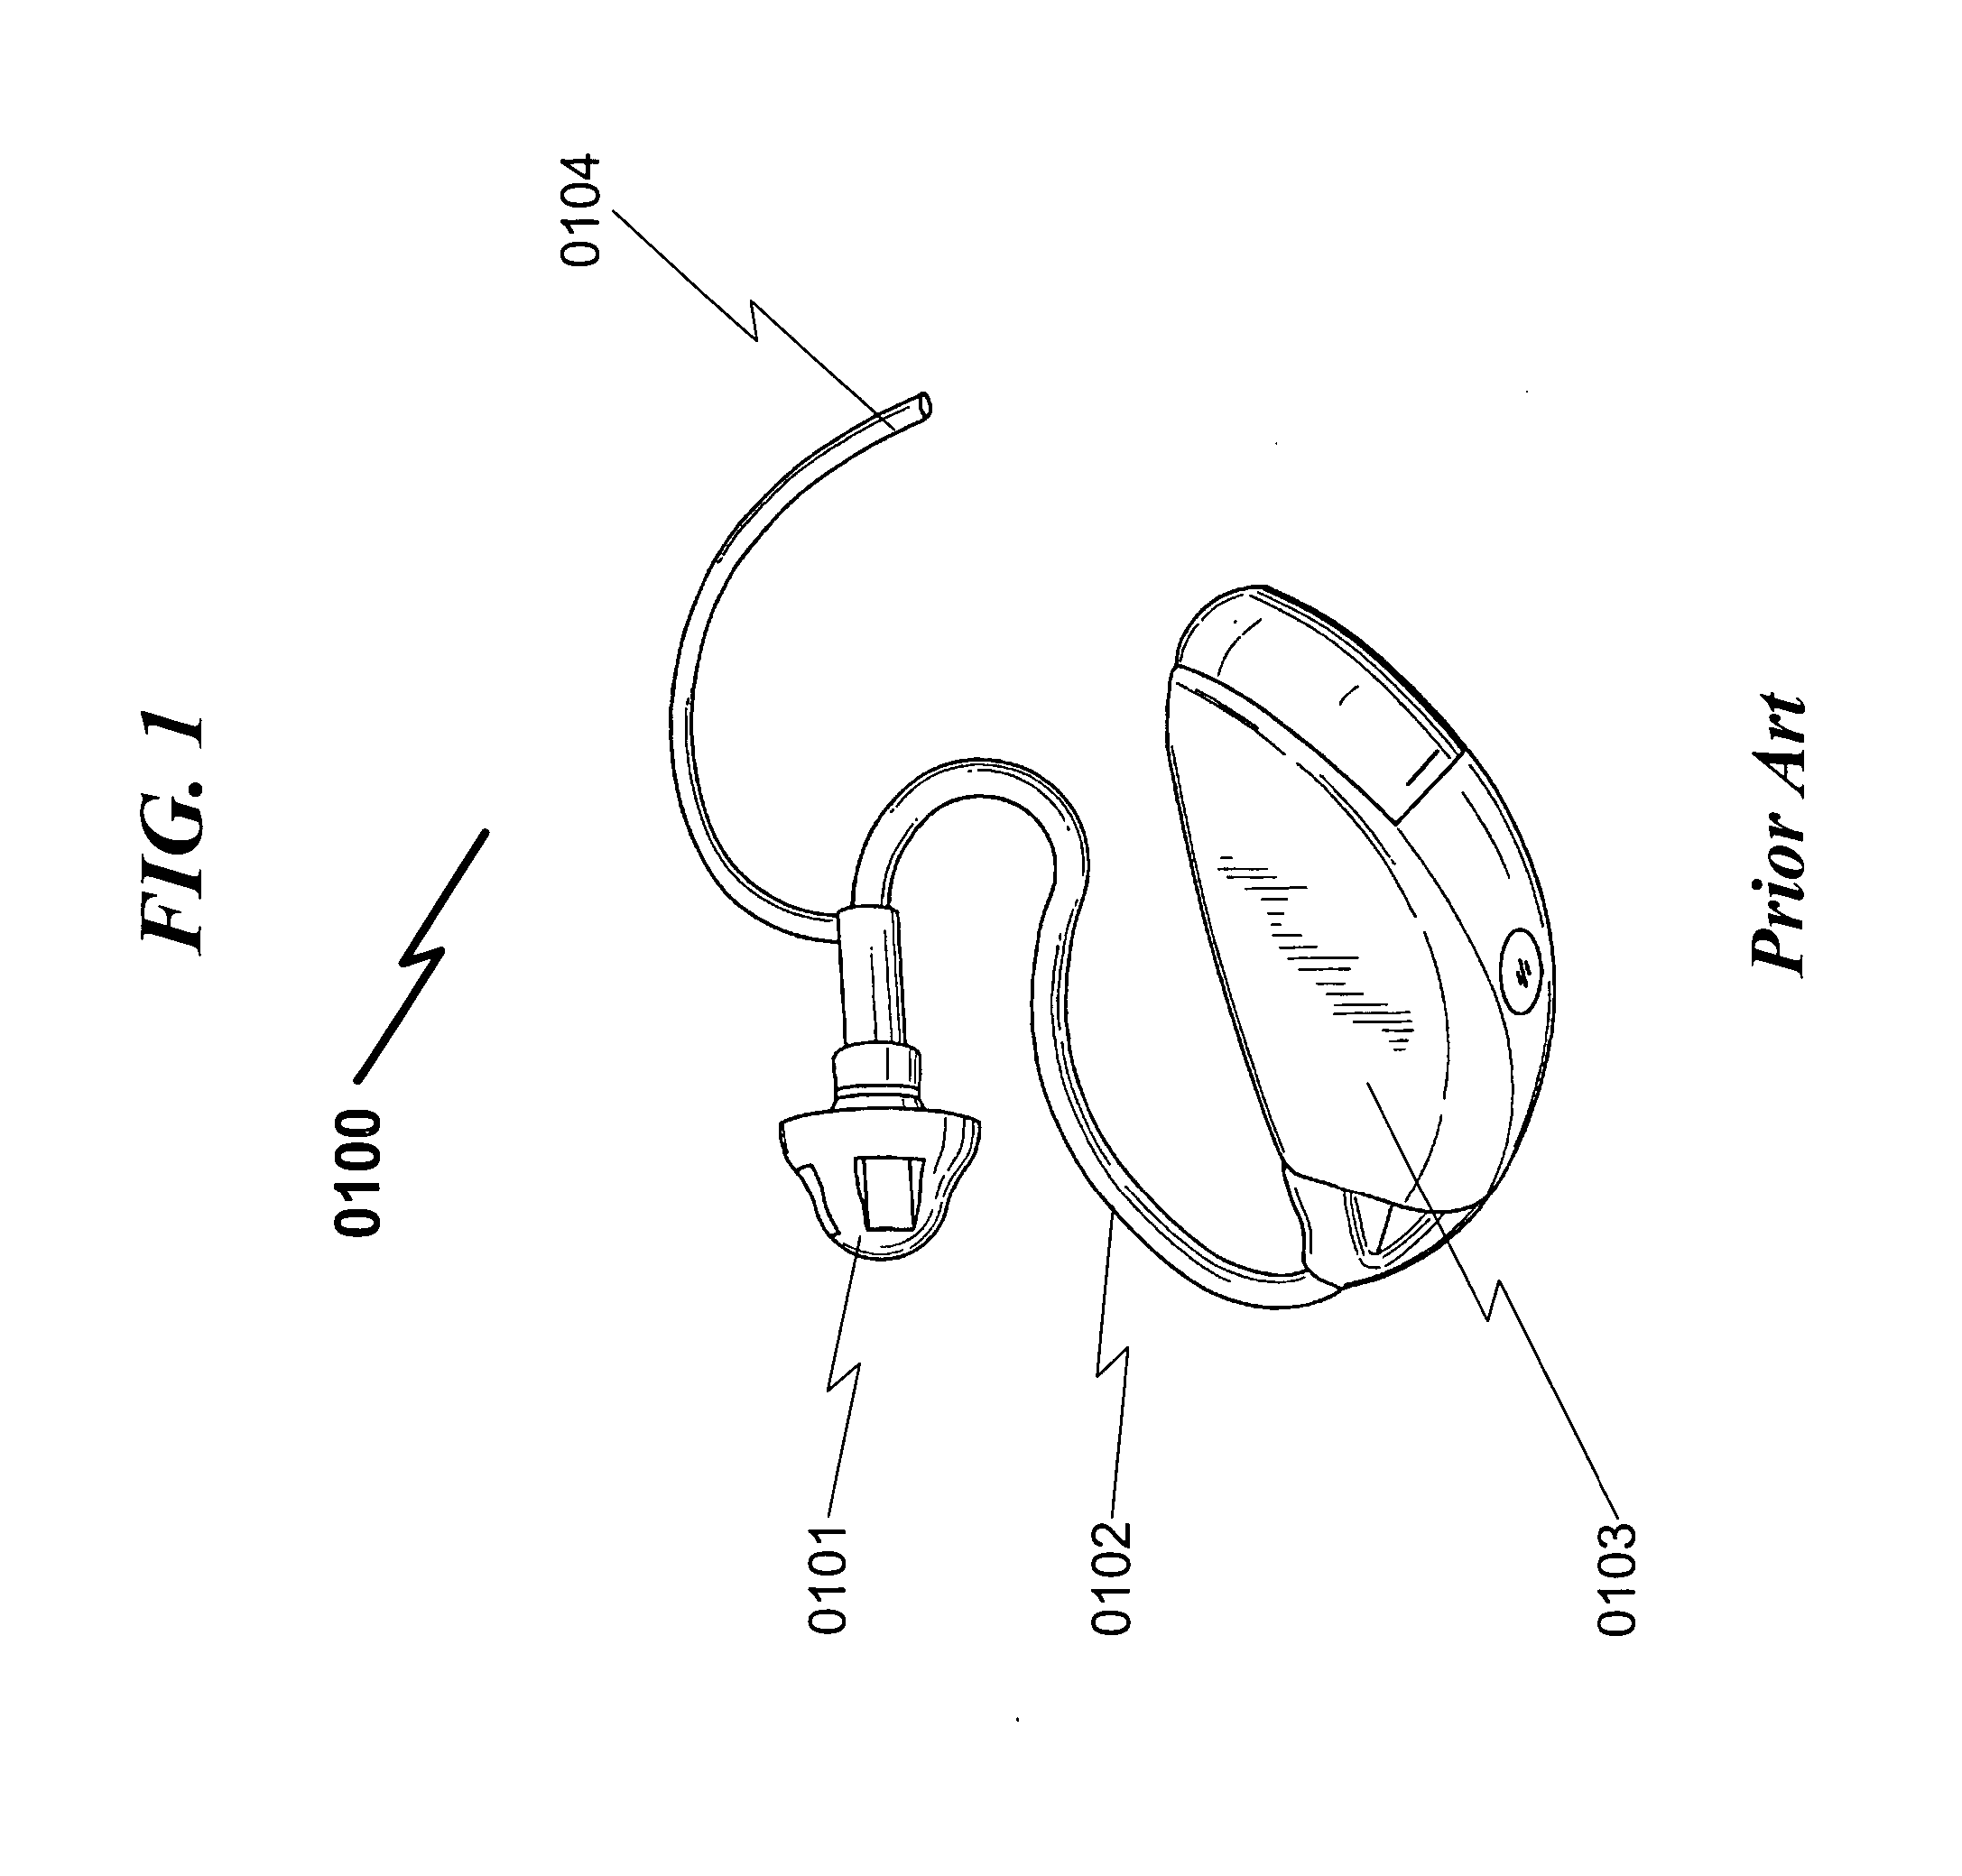 Hearing aid eartip